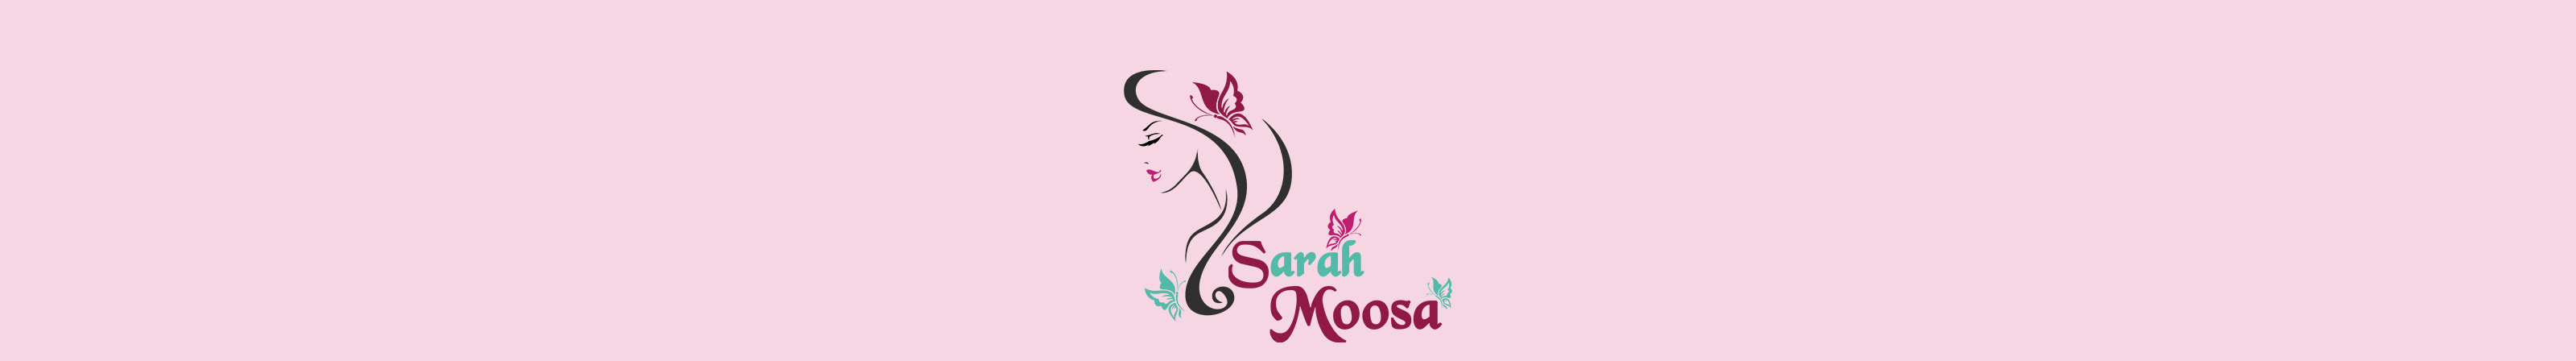 sarah moosas profilbanner